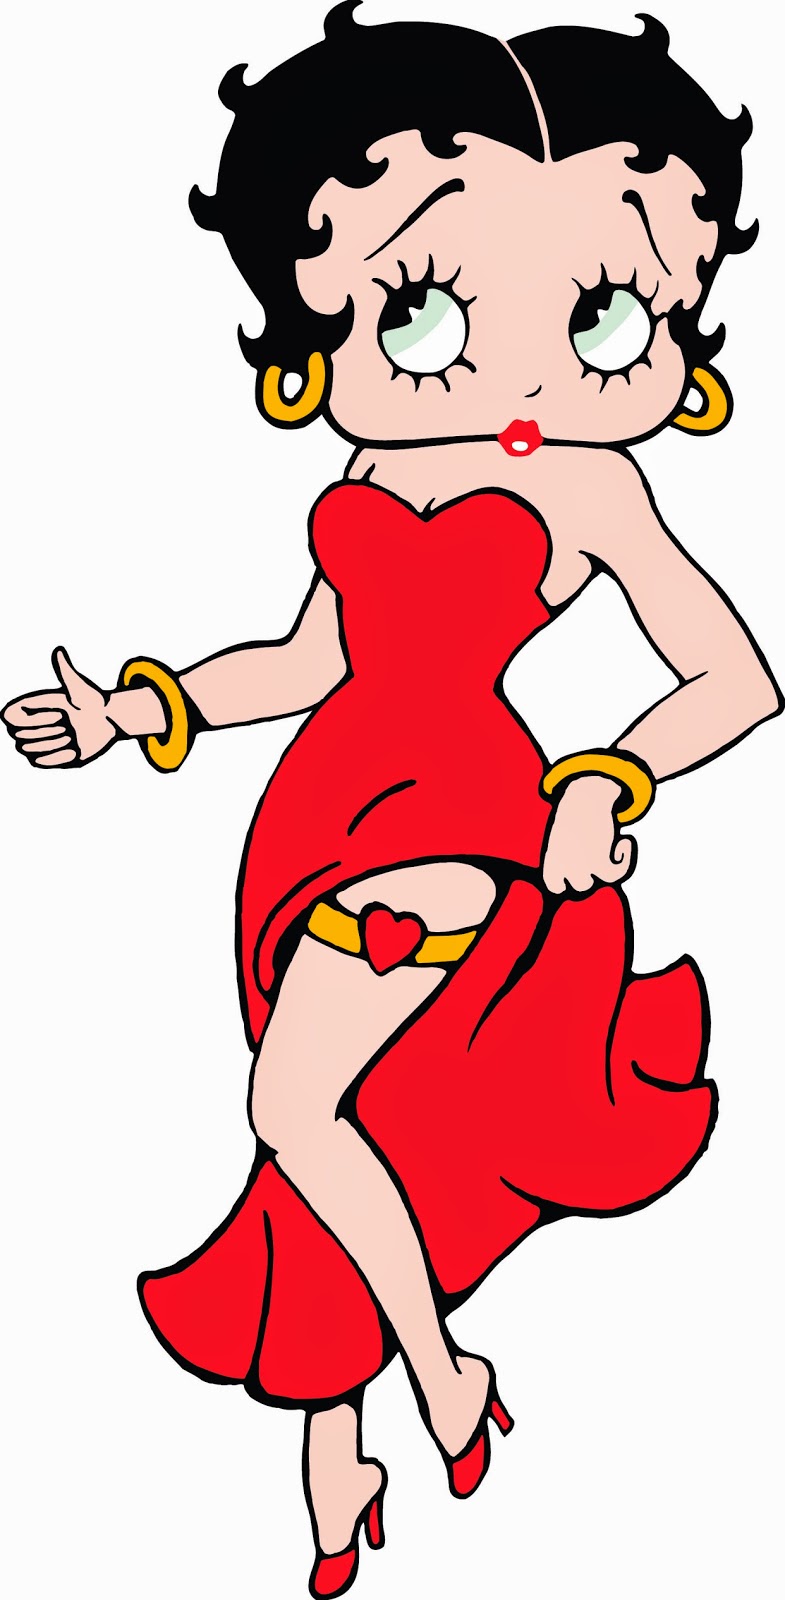 MONEY Cartoon Queen ITEM Z 5-Betty Boop Million Dollar Bills FAKE- NOVELTY 